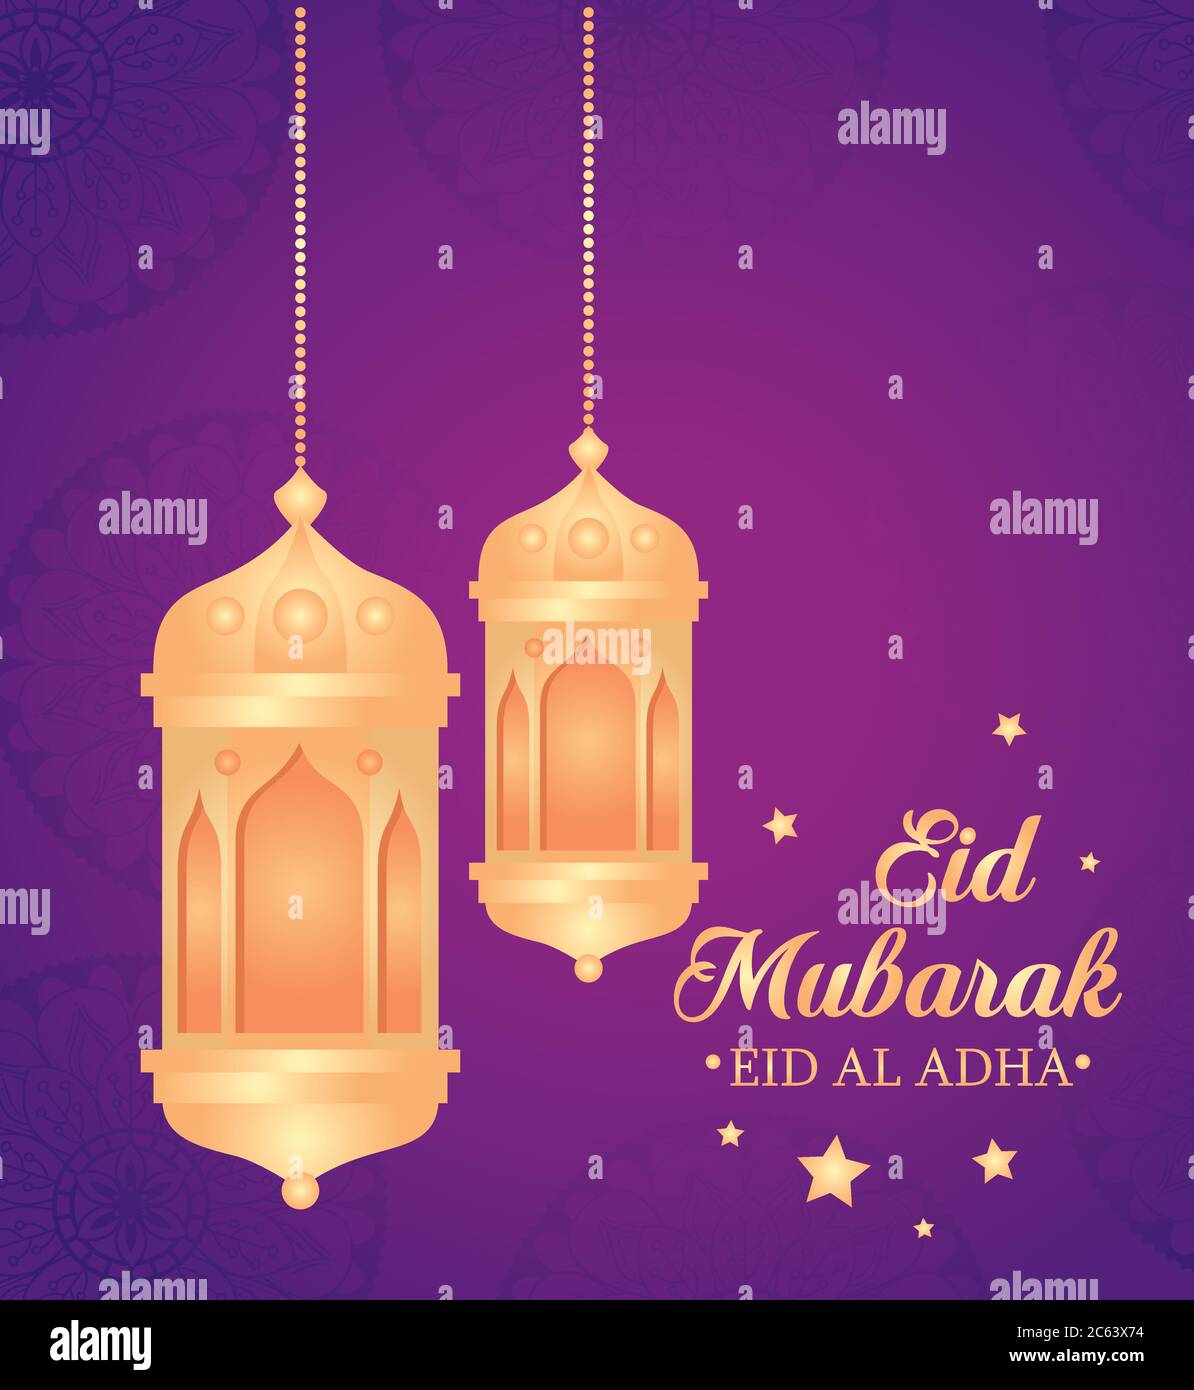 eid al adha mubarak, happy sacrifice feast, with lanterns hanging decoration Stock Vector